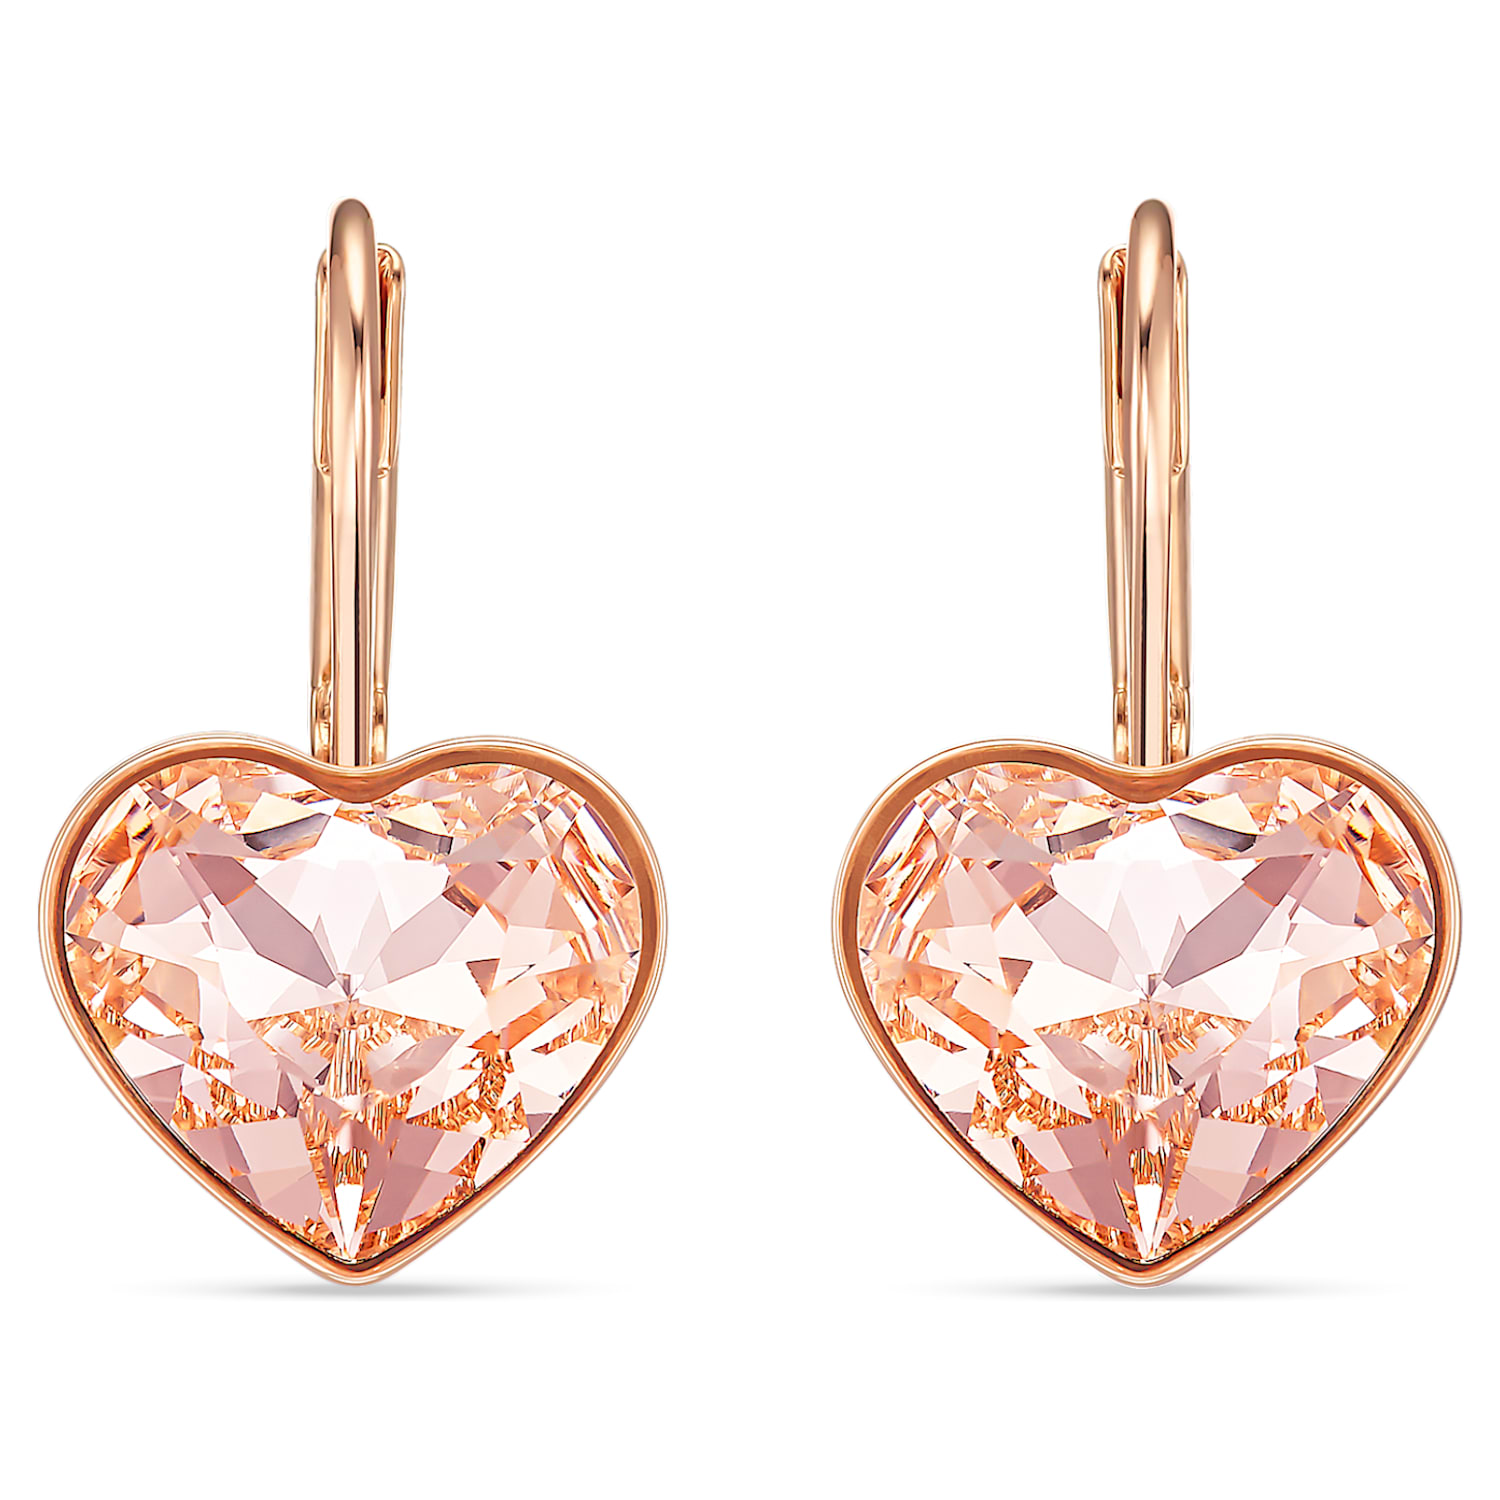 Rose Gold  Swarovski Crystal Heart Earrings E4910C  Elements  Jewellery   The Cornstore